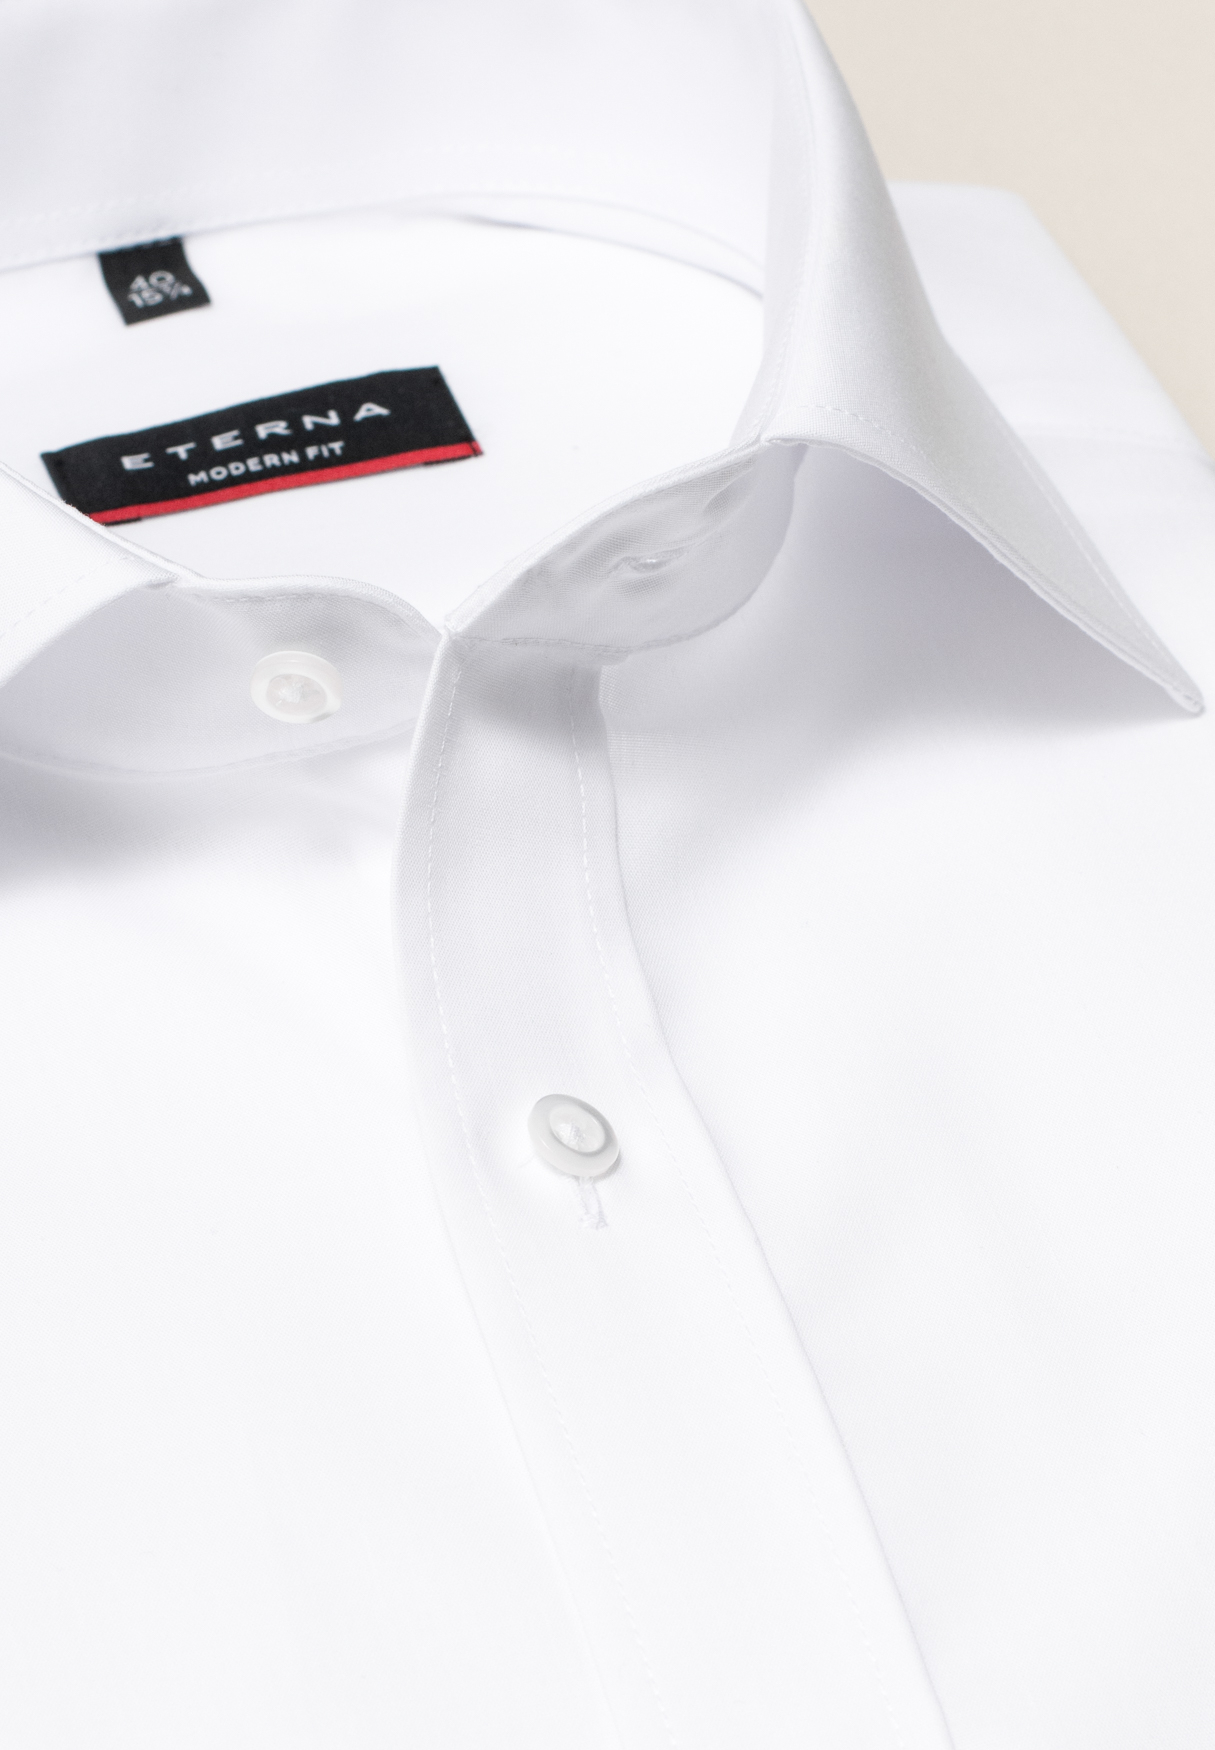 MODERN weiß weiß | 1SH00113-00-01-41-1/1 in Langarm Original | Shirt FIT | 41 unifarben |